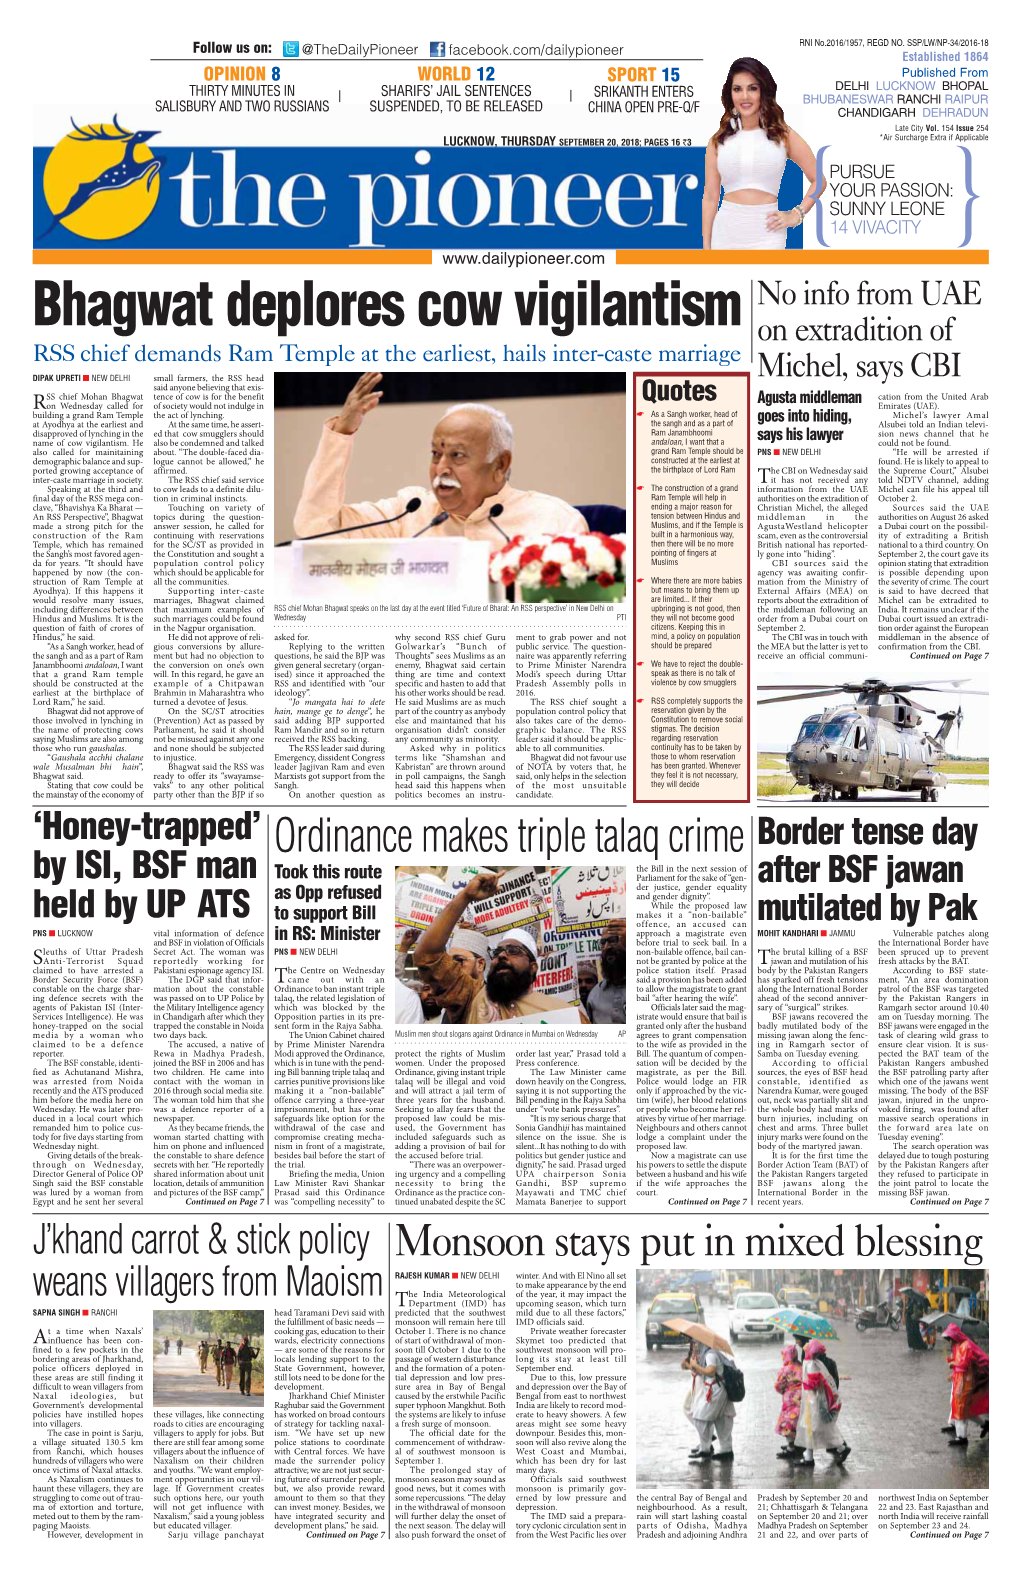 Bhagwat Deplores Cow Vigilantism